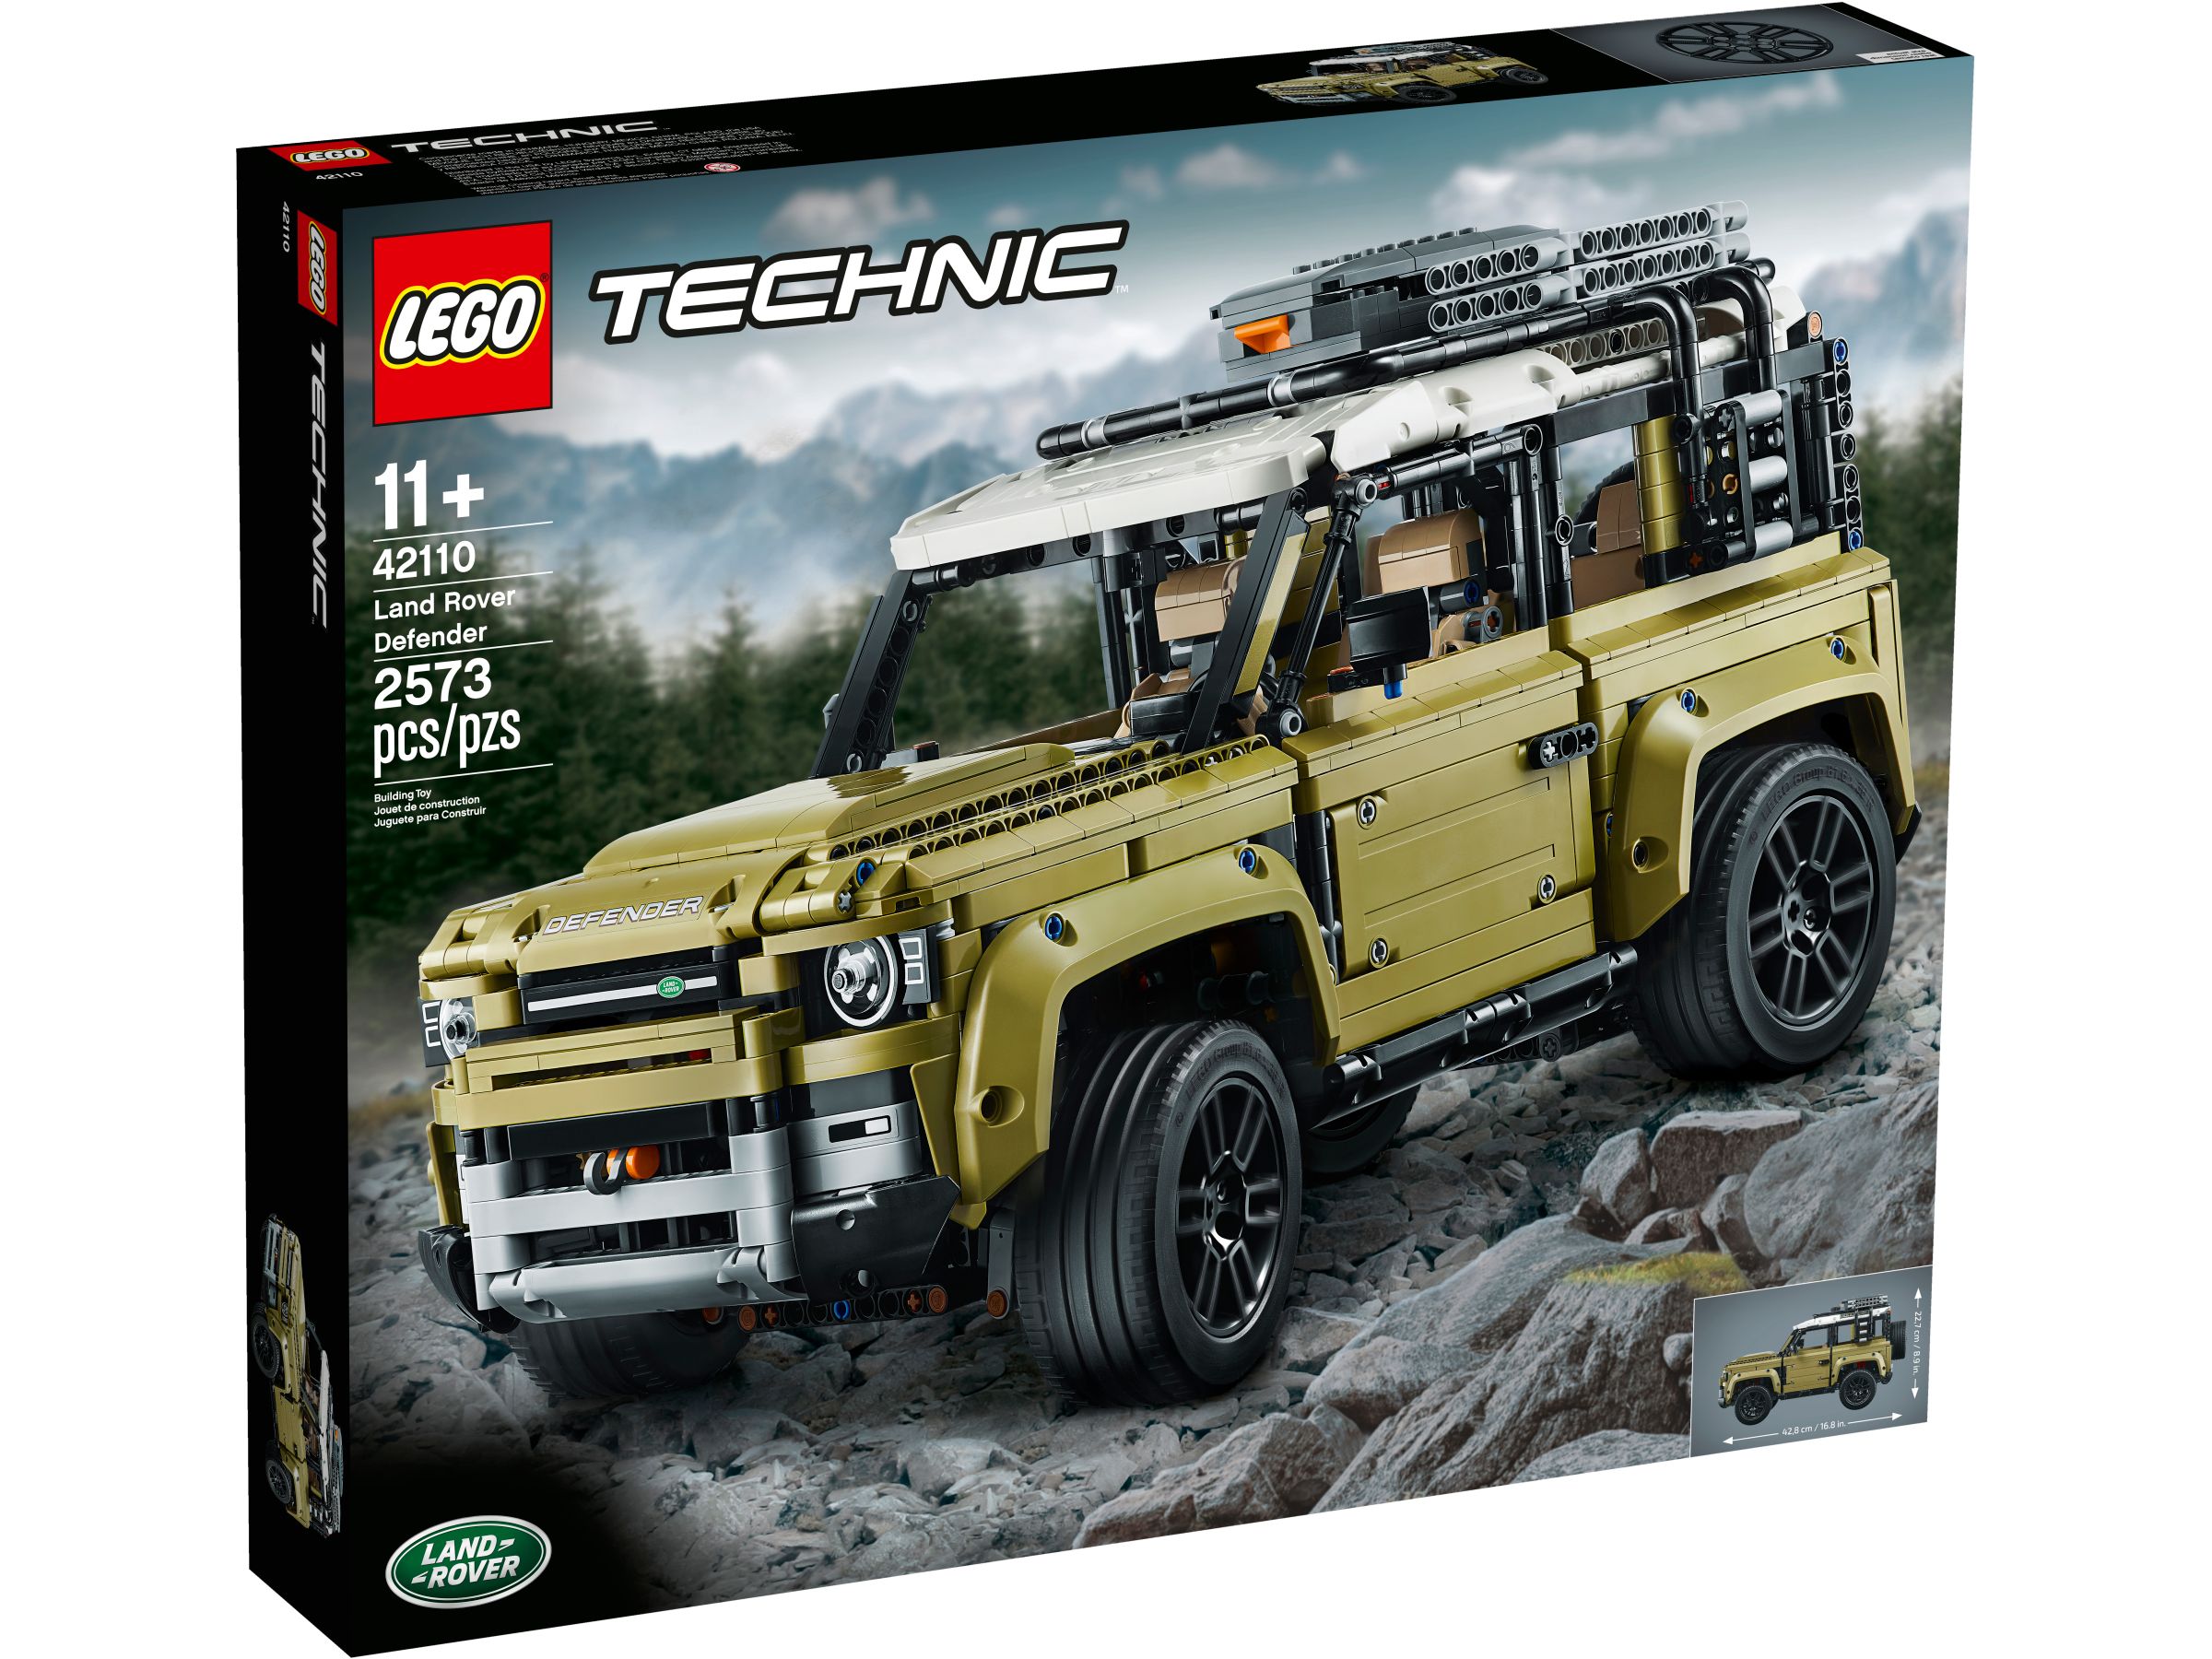 LEGO Technic 42110 Land Rover Defender LEGO_42110_alt1.jpg